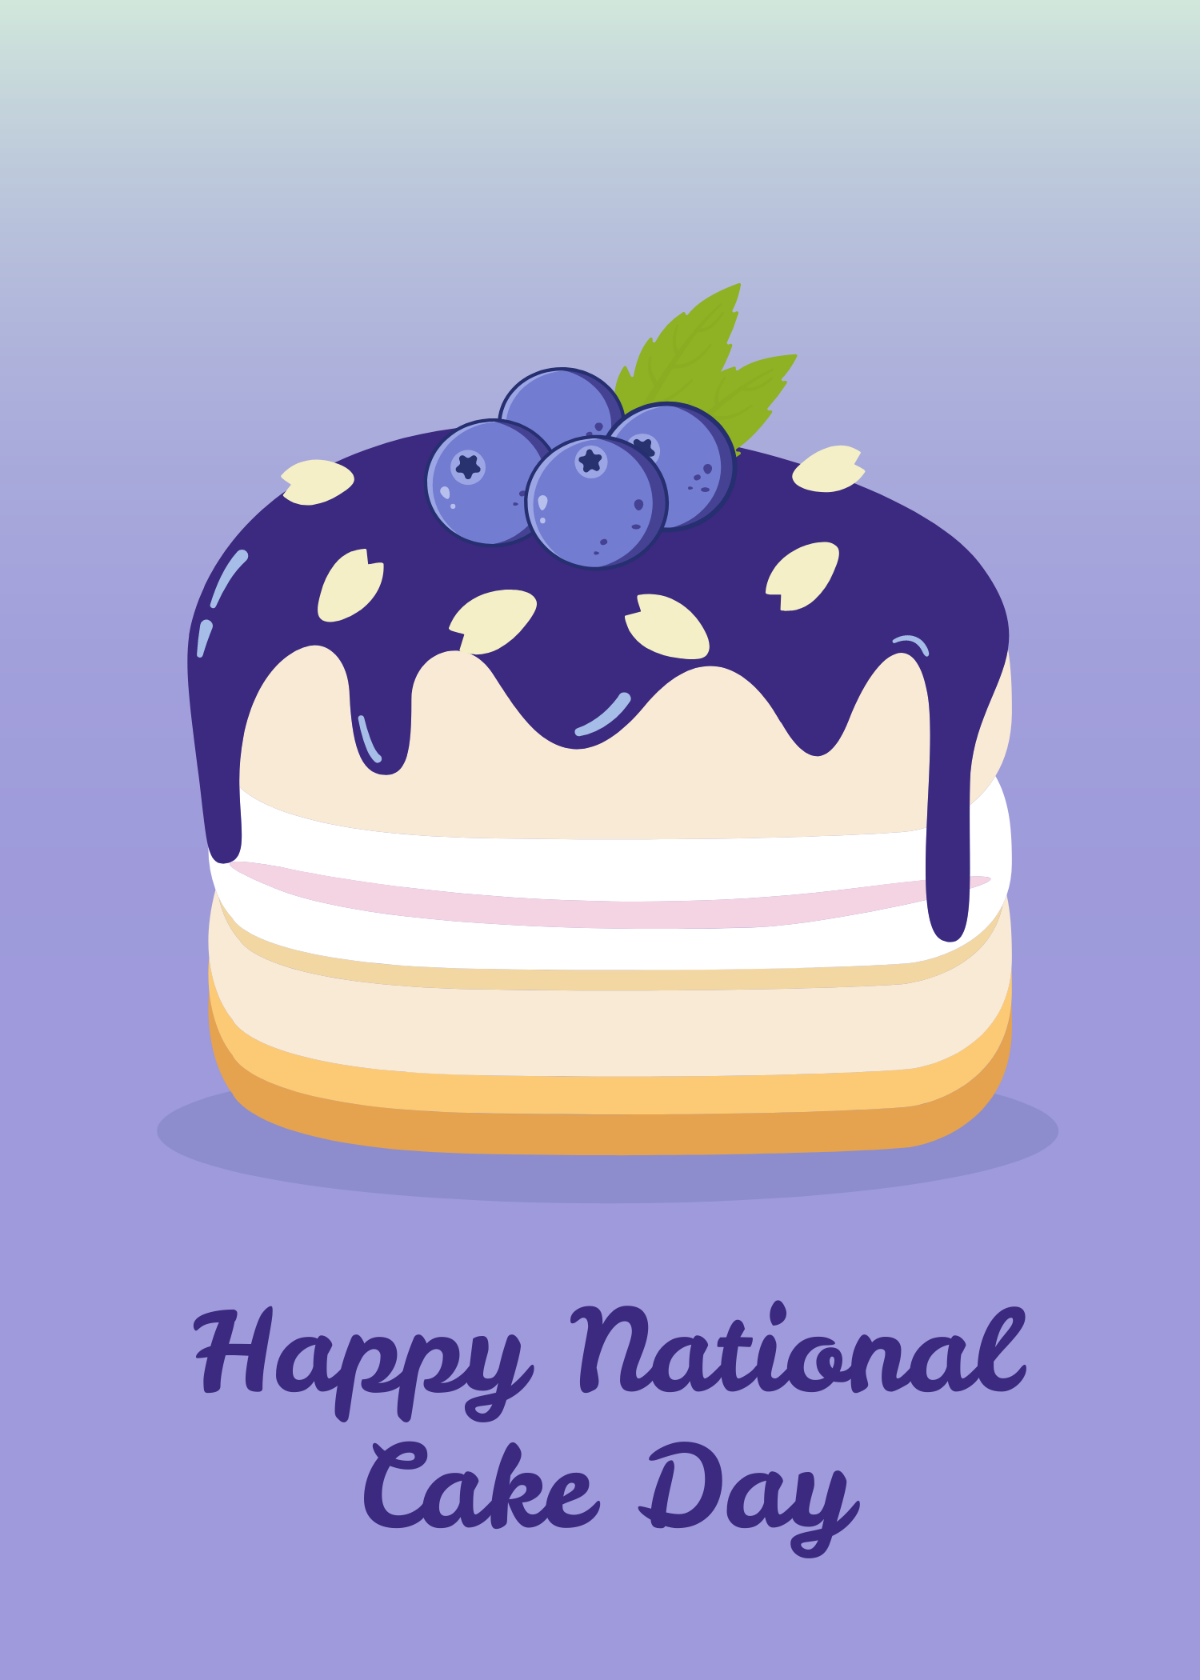 National Cake Day Greeting Card